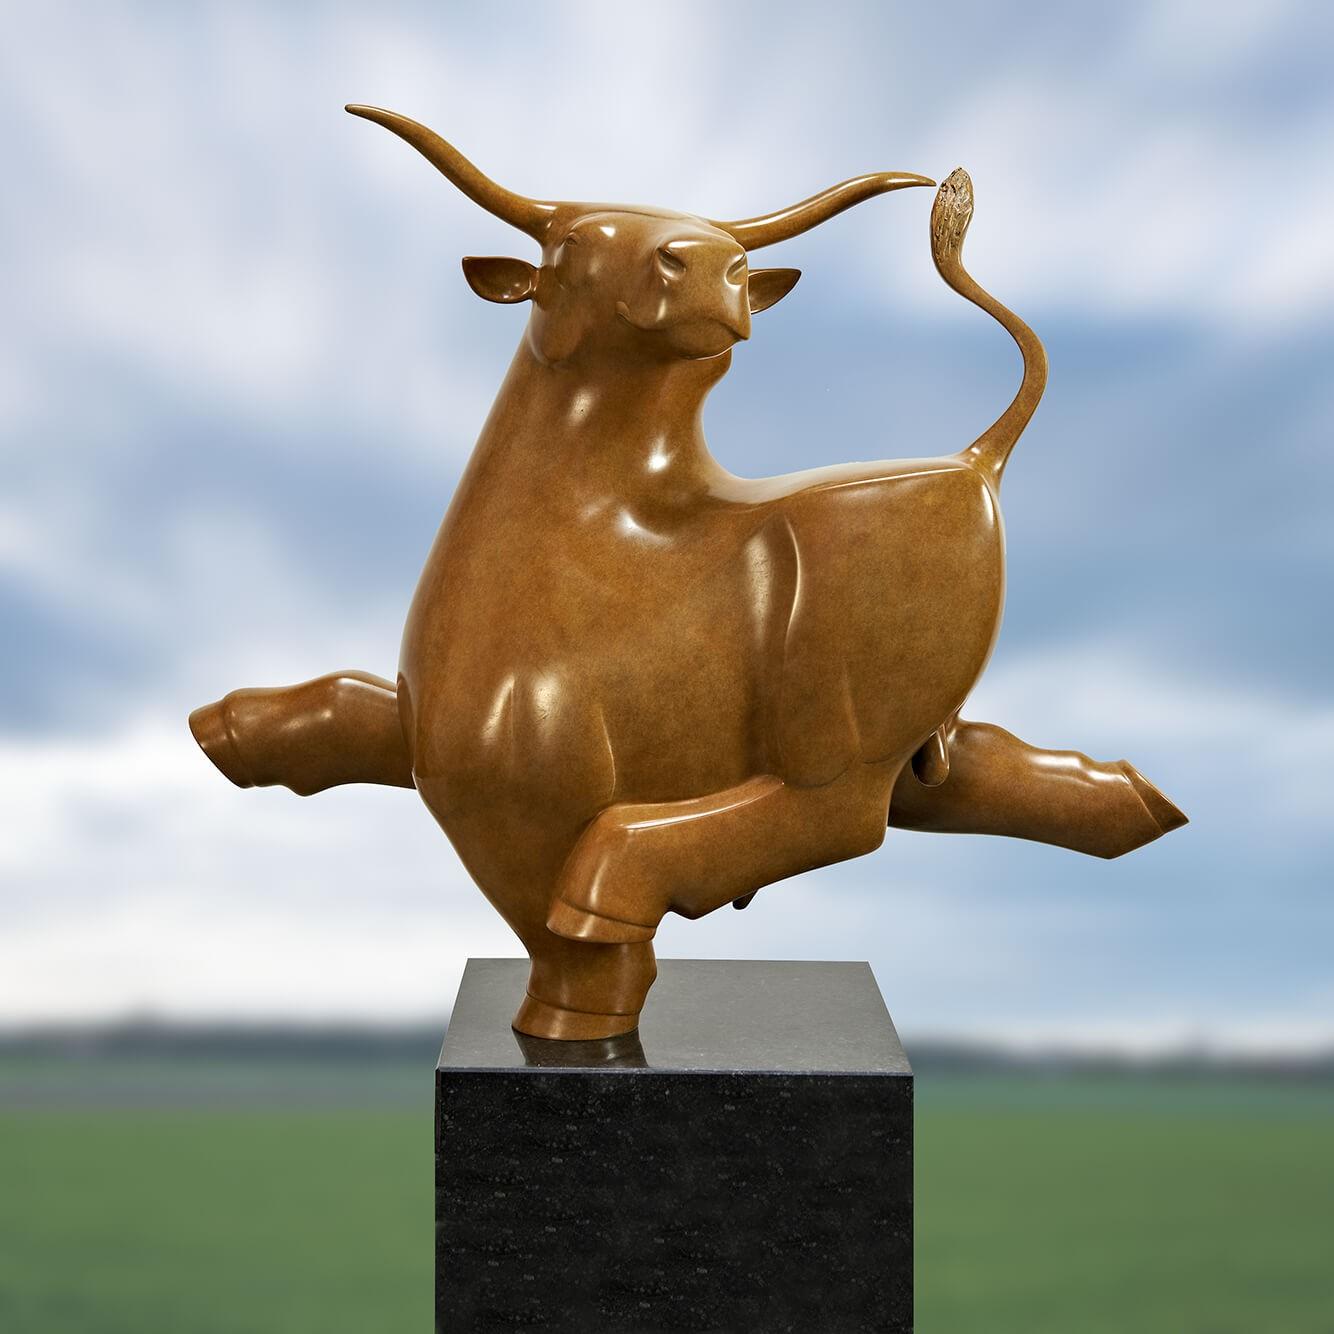 Evert den Hartog Figurative Sculpture – Wandelende Stier no. 3 Groot – Großer gehender Stier, Bronzeskulptur, Tier 